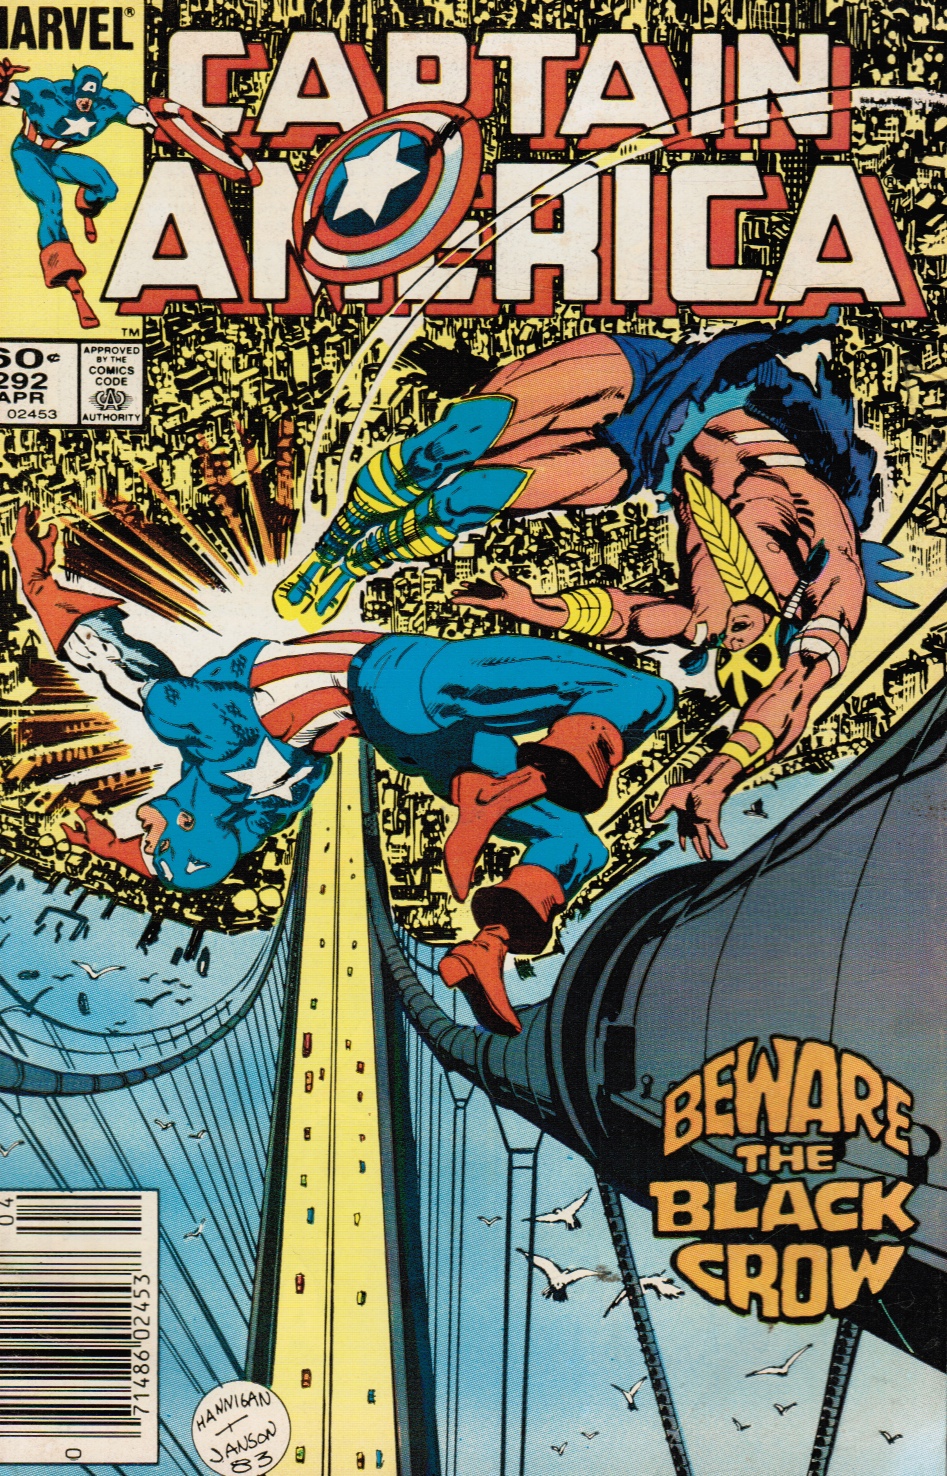 DEMATTEIS, J. M (WRITER) - Captain America #292: Beware of the Black Crow